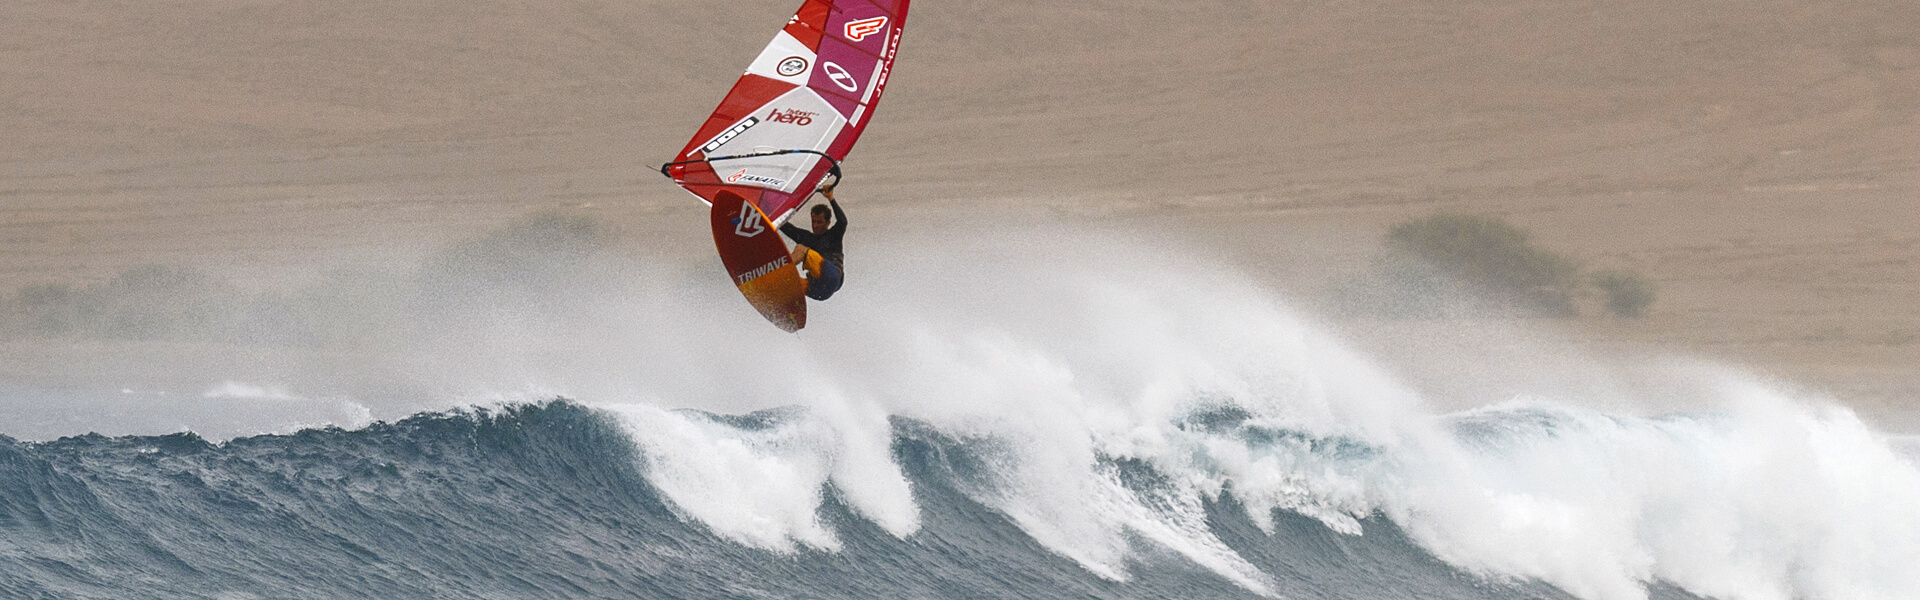 punta-preta-windsurf-insane